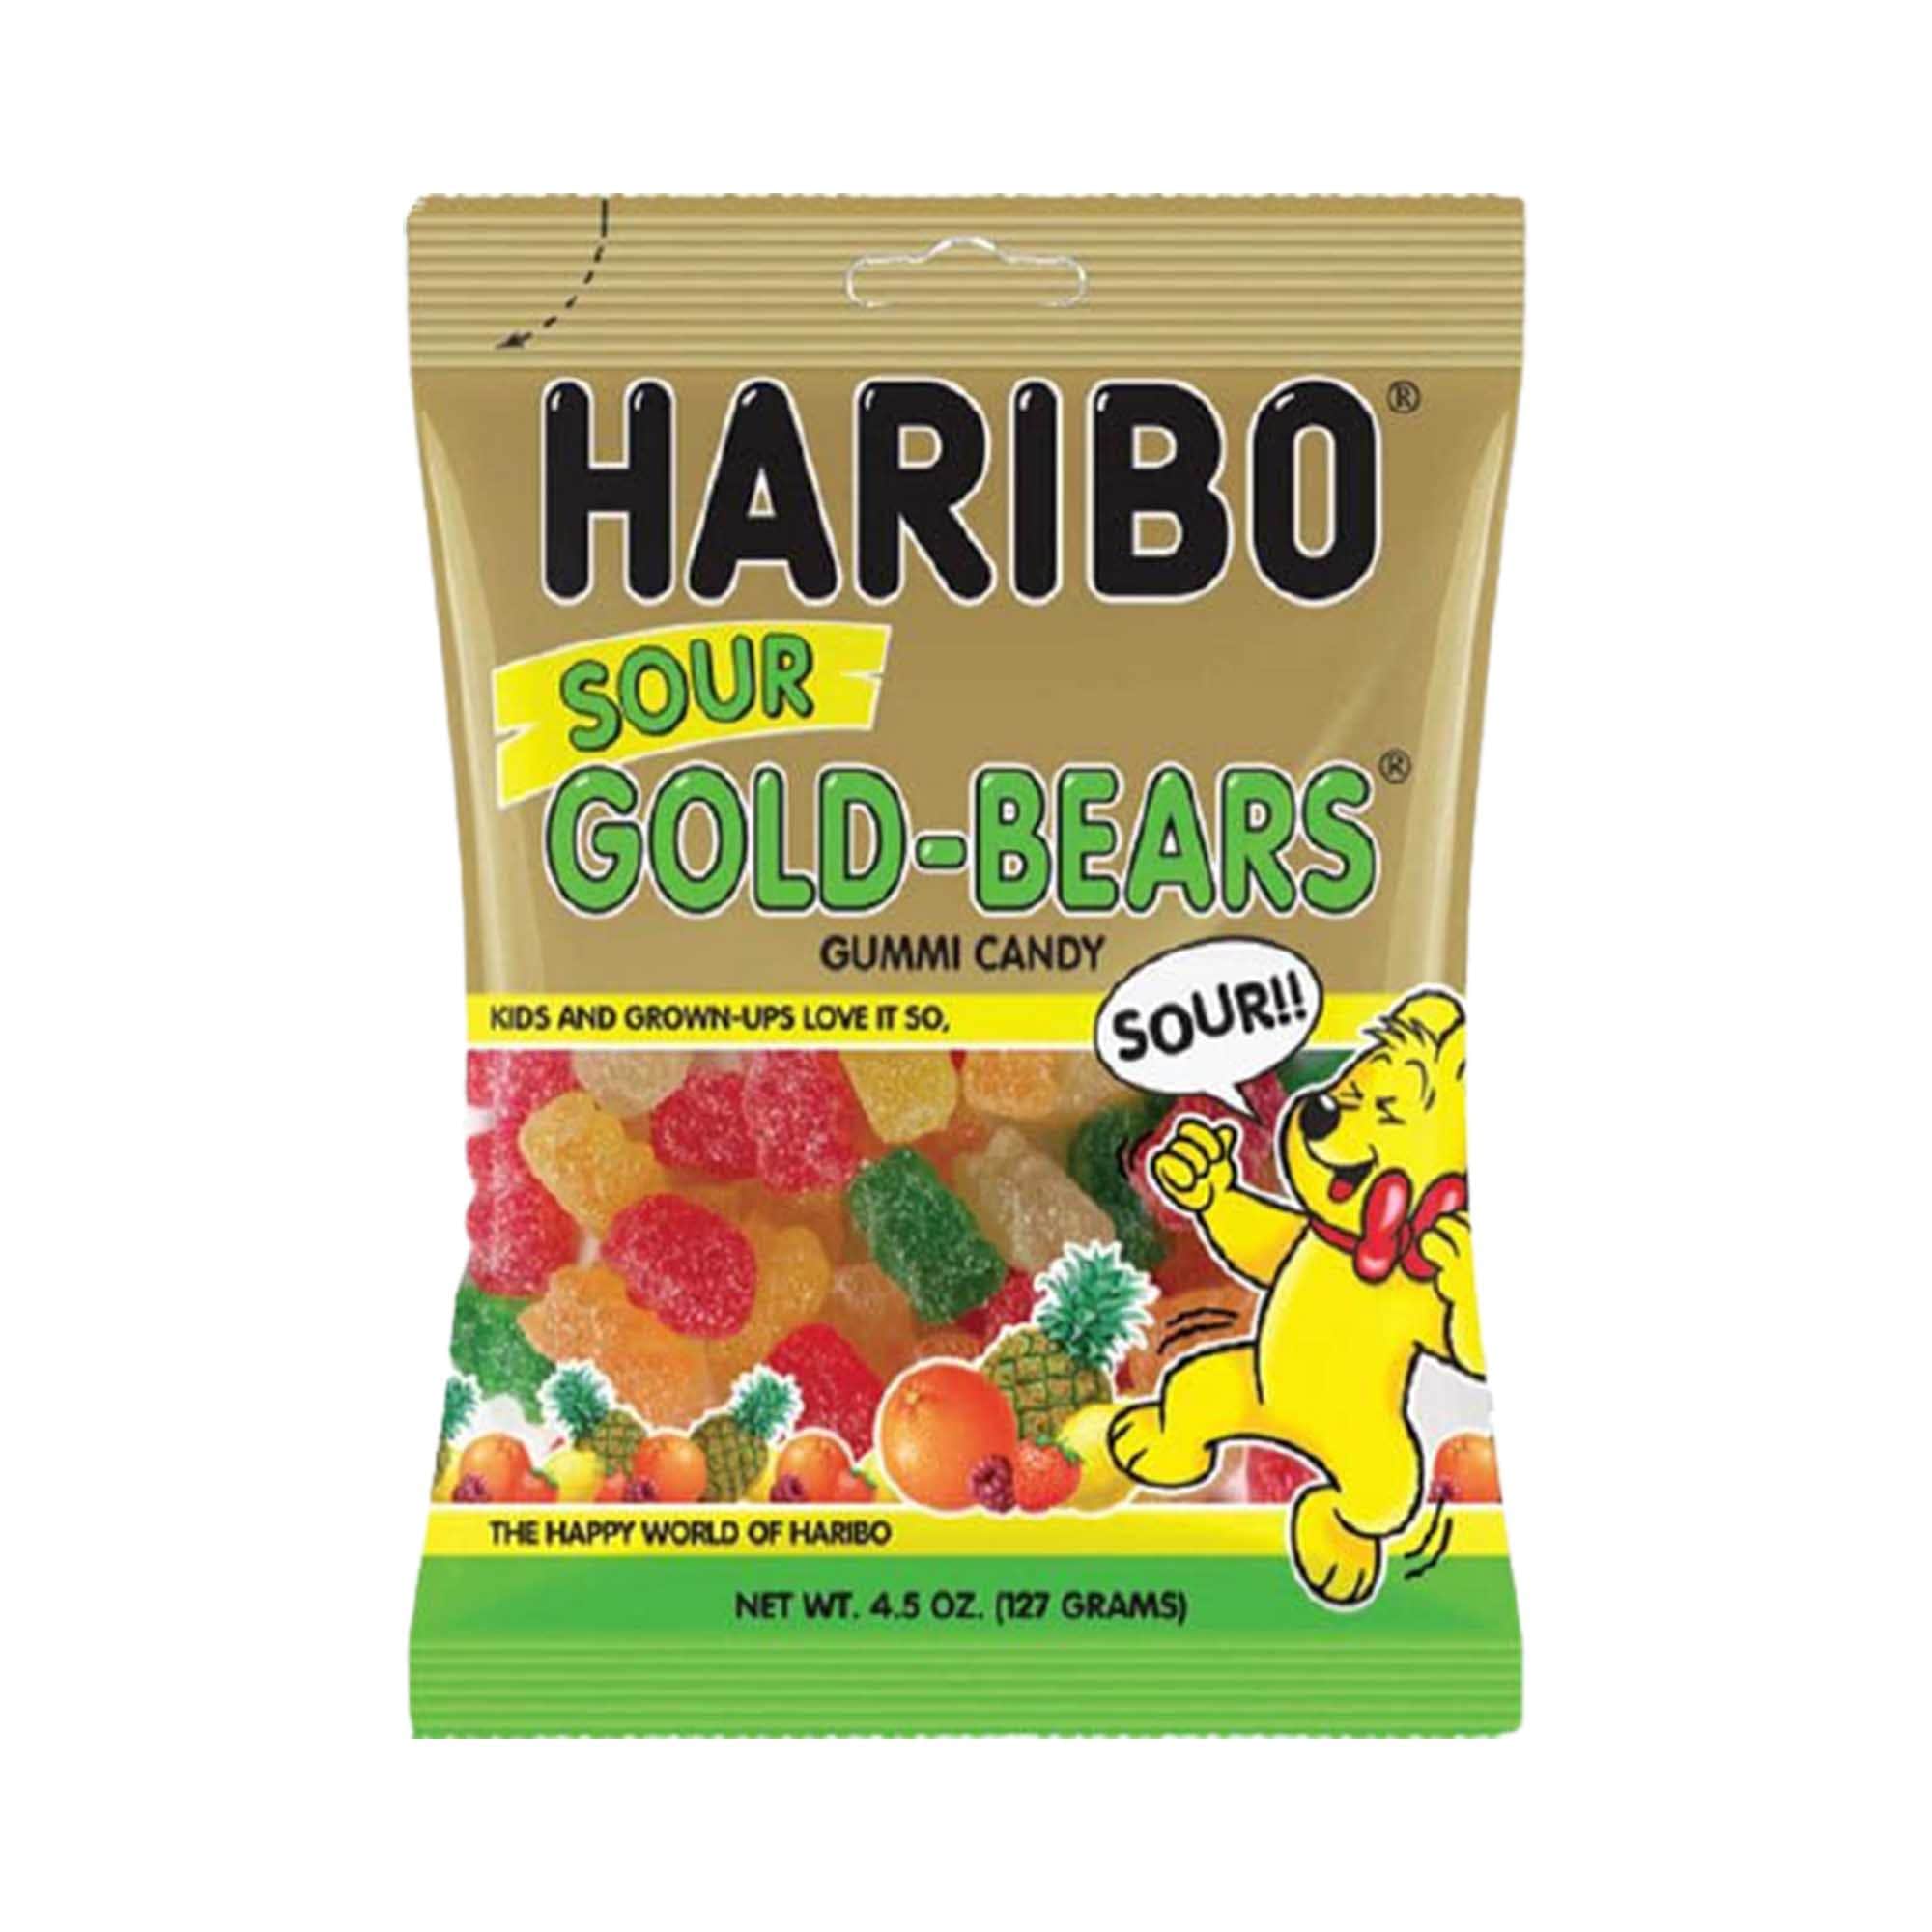 Haribo Goldbären sauer minis - Gold Bears Sour minis